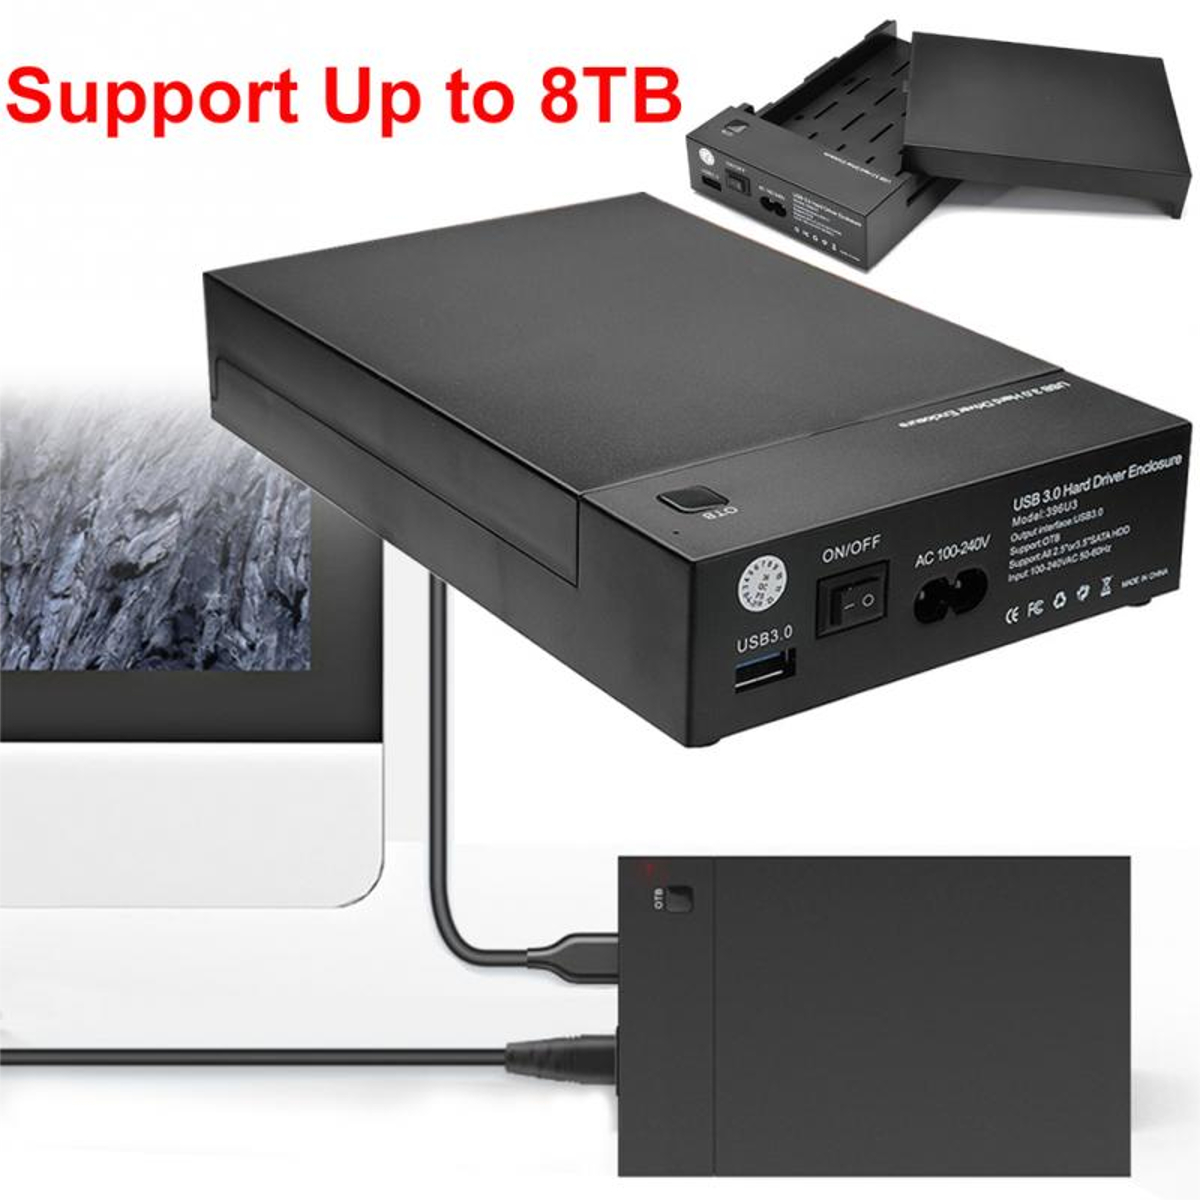 USB3.0 To SATA Serial Hard Disk External Box Enclosure Case For 2.5/3.5 inch HDD SSD Hard Drive 7